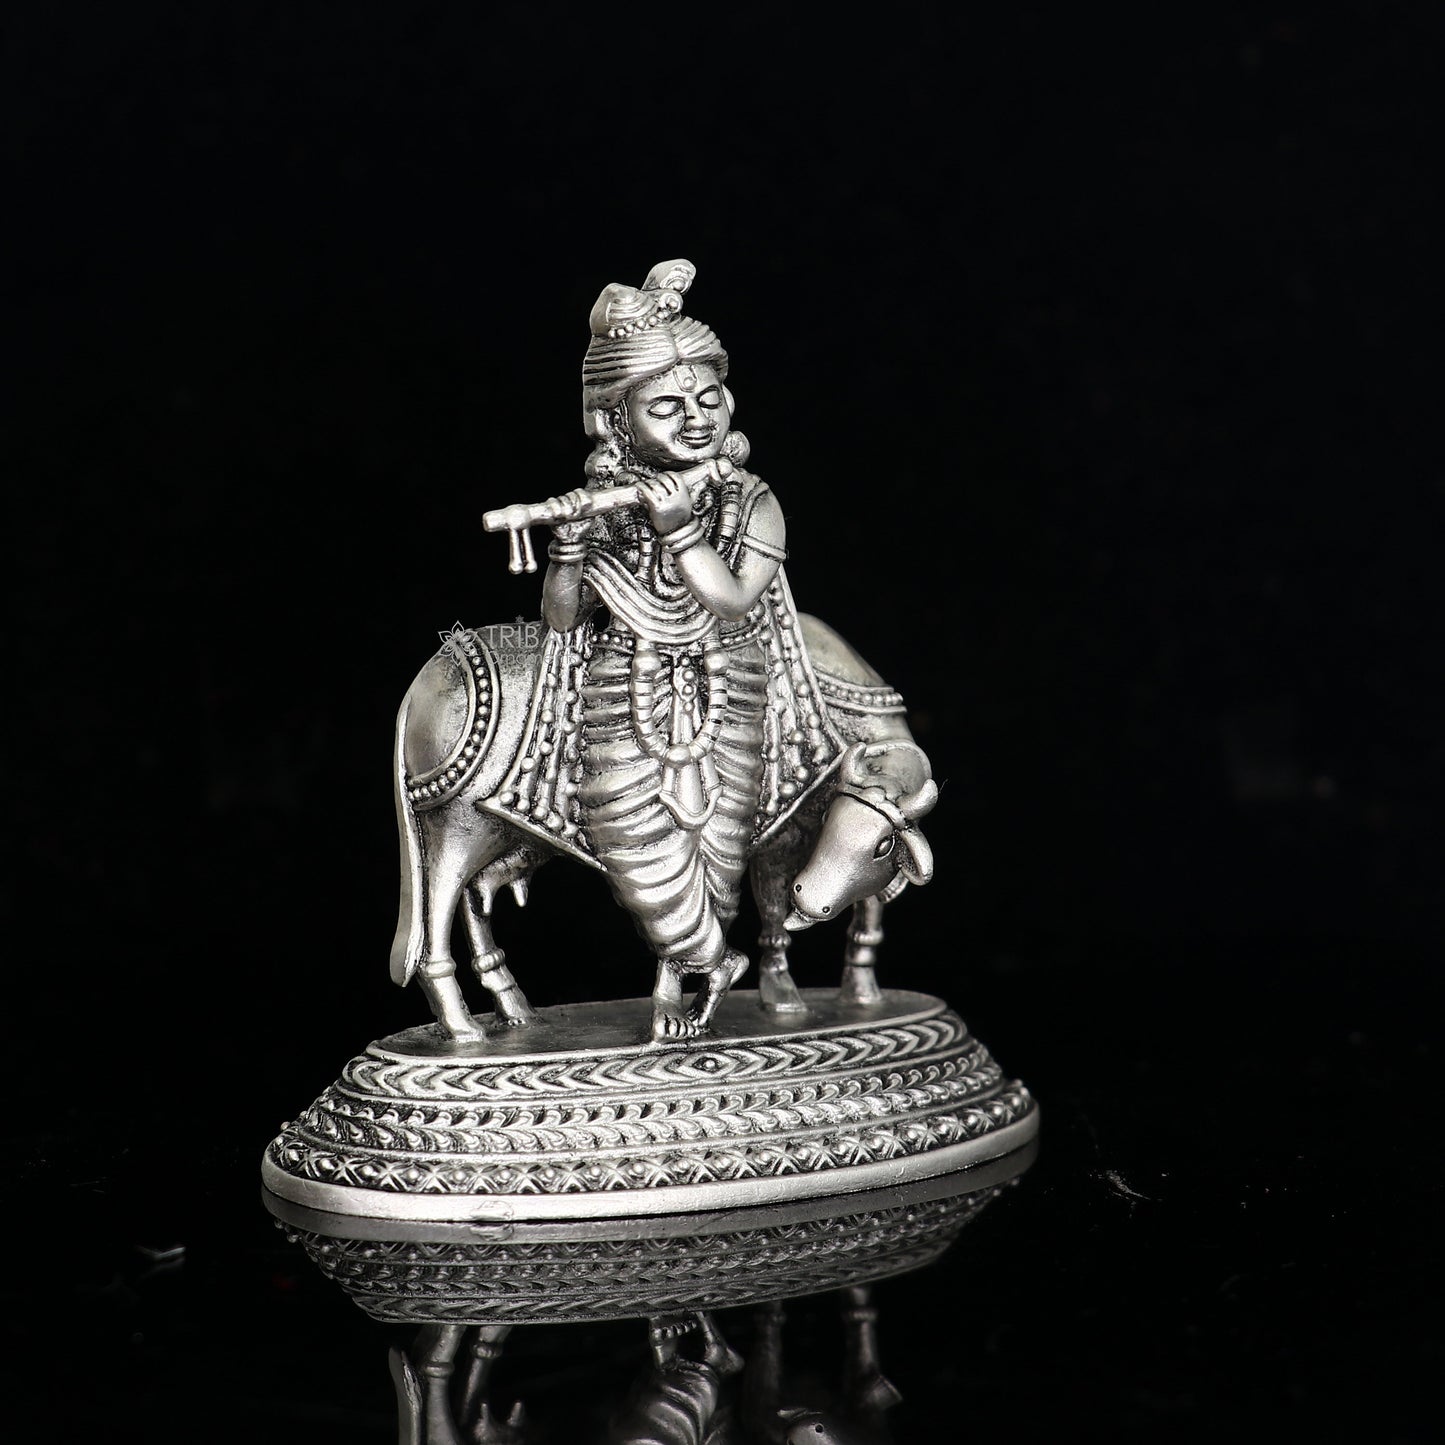 925 Sterling silver handmade design Indian Idols Lord krishna with cow & flute statue figurine, puja articles decorative diwali puja art682 - TRIBAL ORNAMENTS